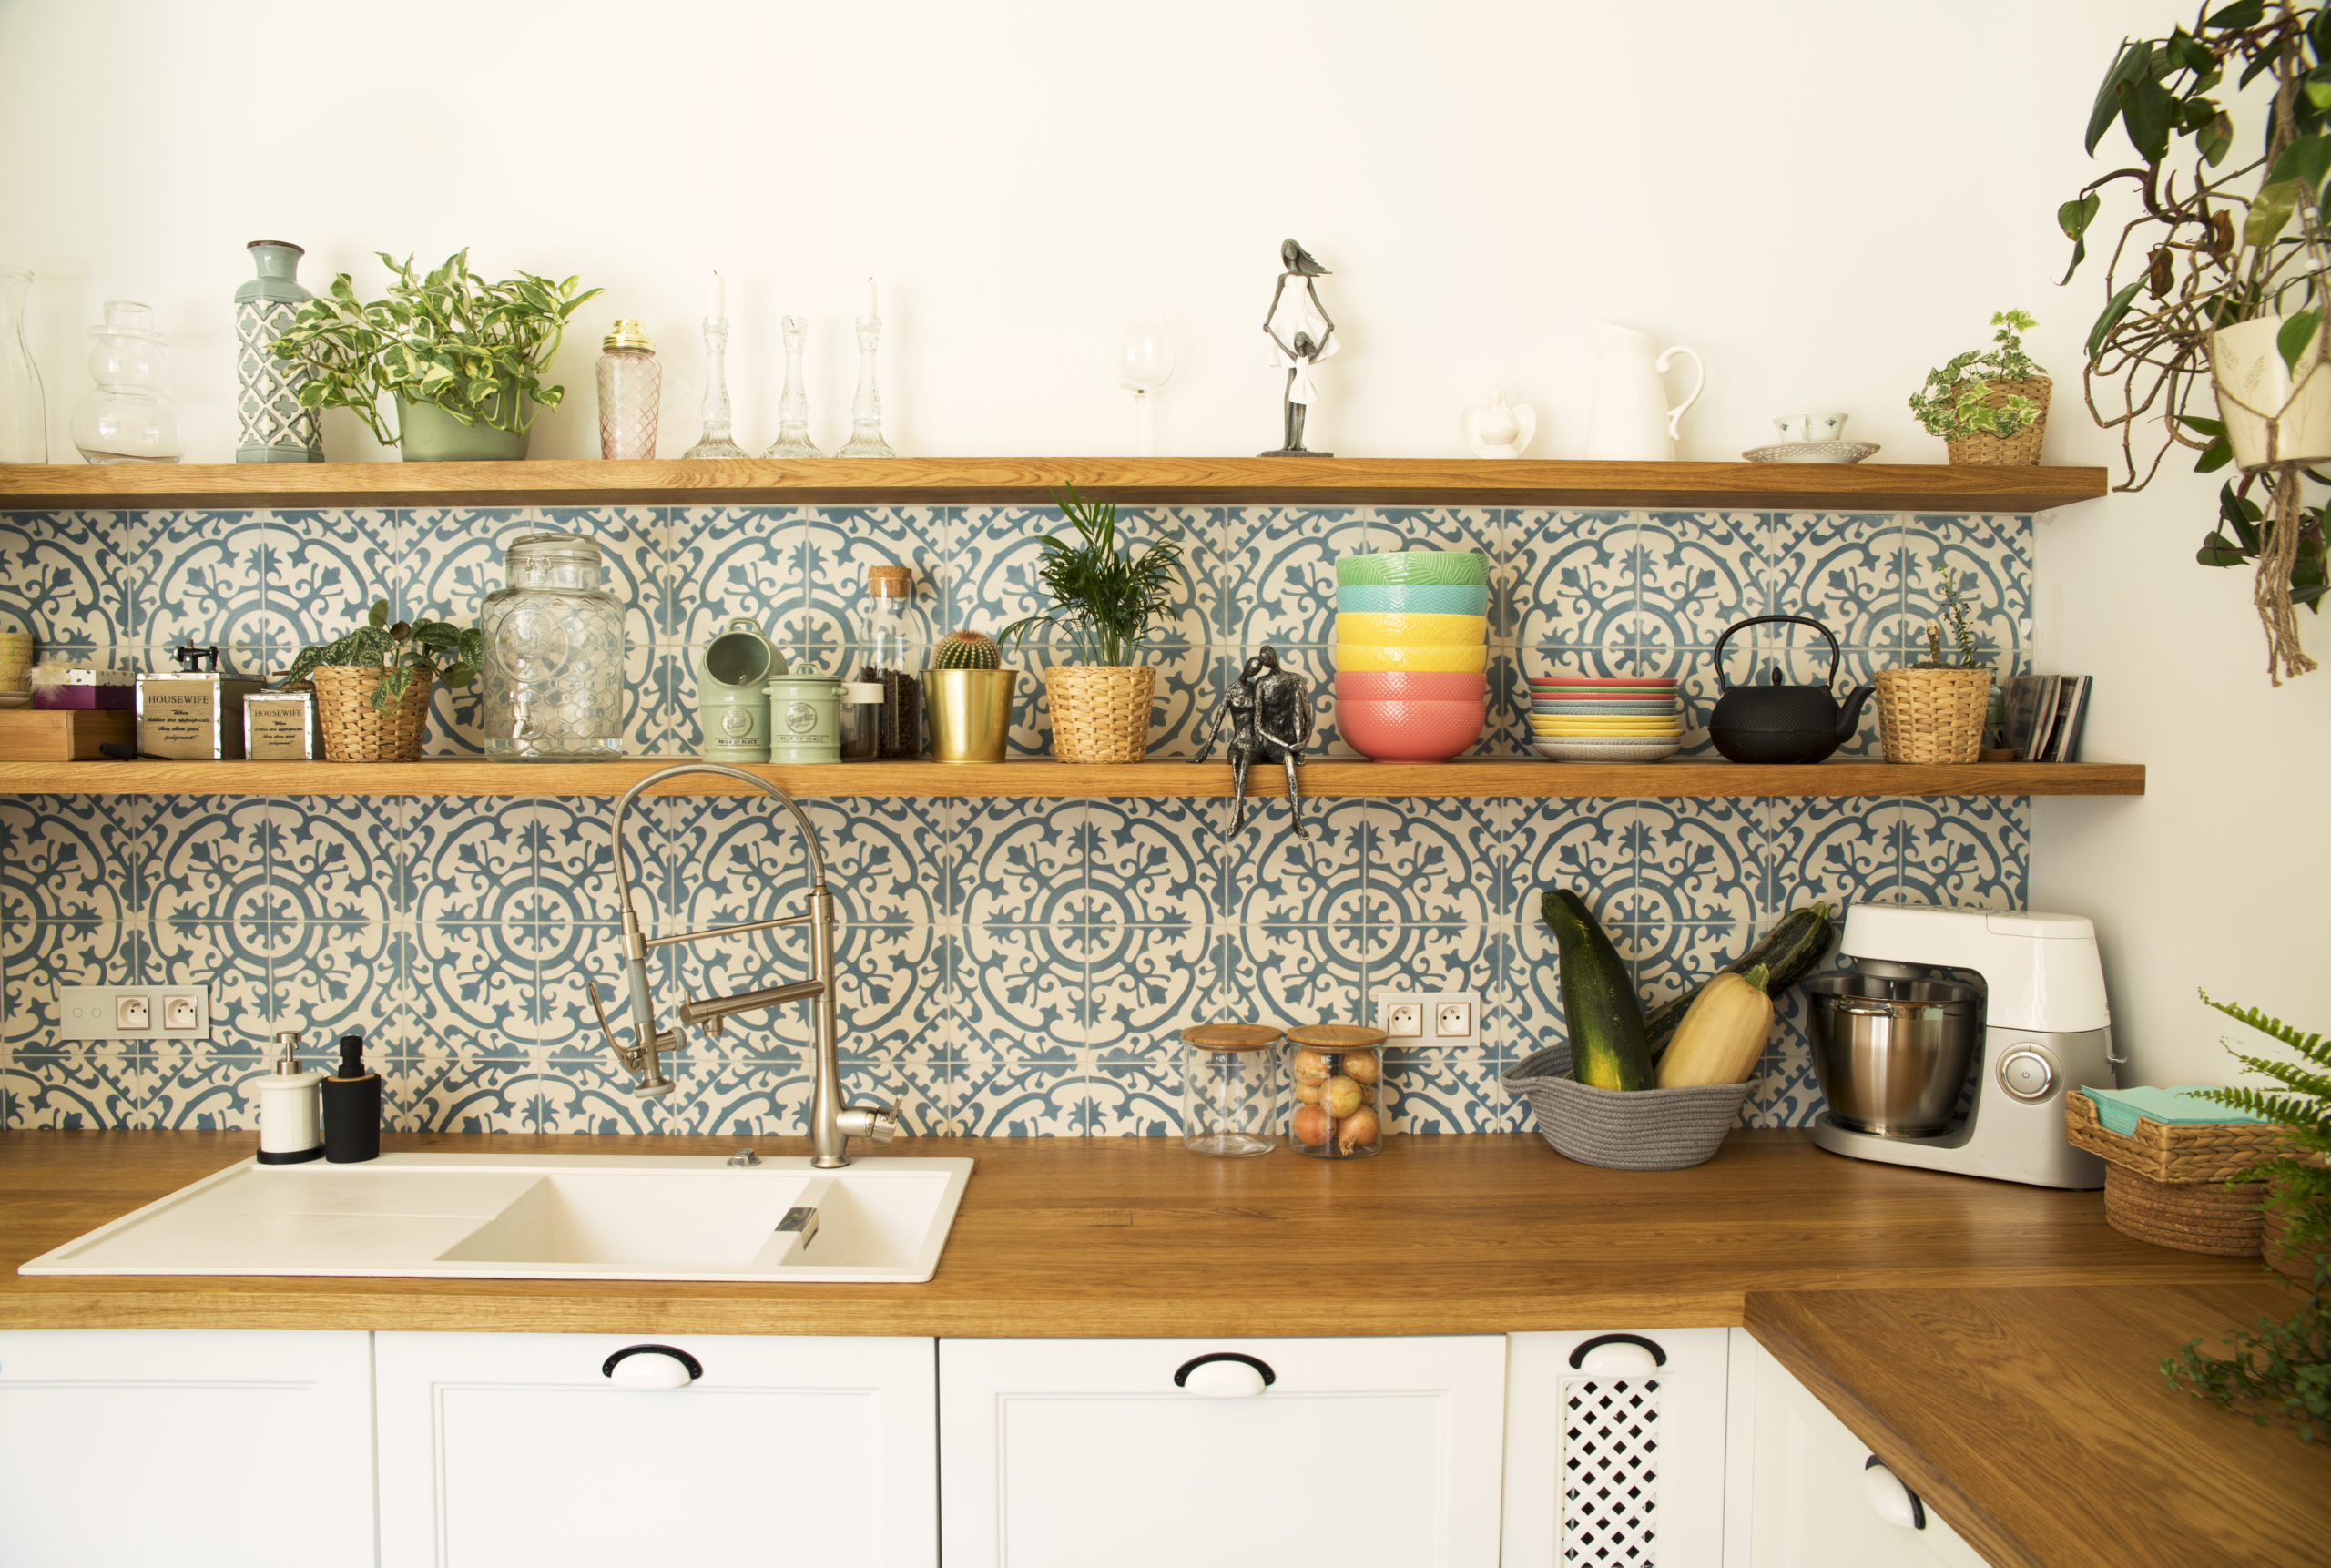 More ideas: DIY Rustic Kitchen Decor Accessories Marble Kitchen